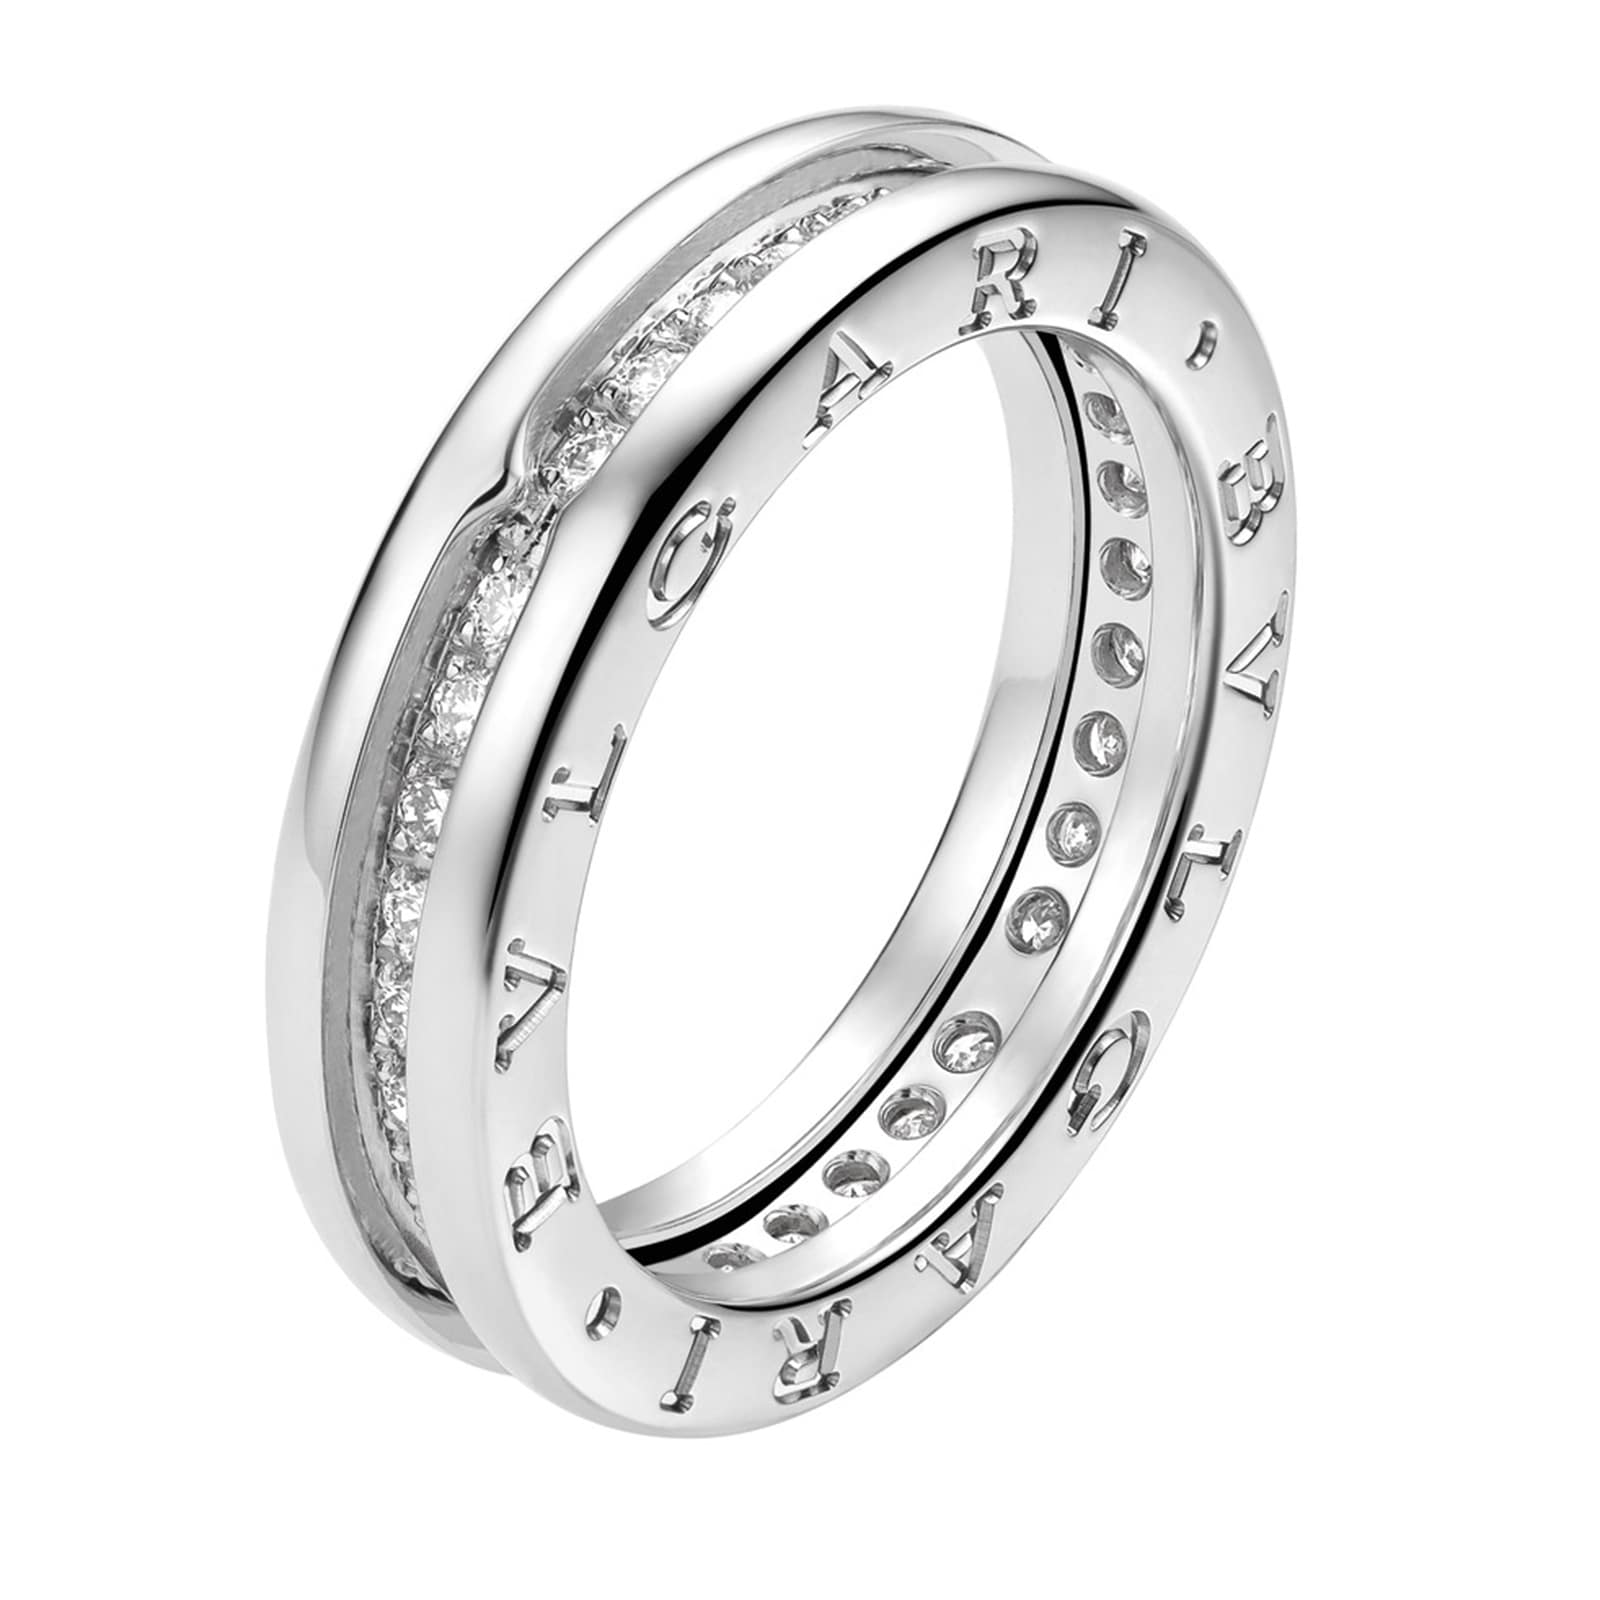 BVLGARI JEWELRY 18k White Gold B.ZERO1 1 Band 0.48cttw Diamond Ring - Size  6.25